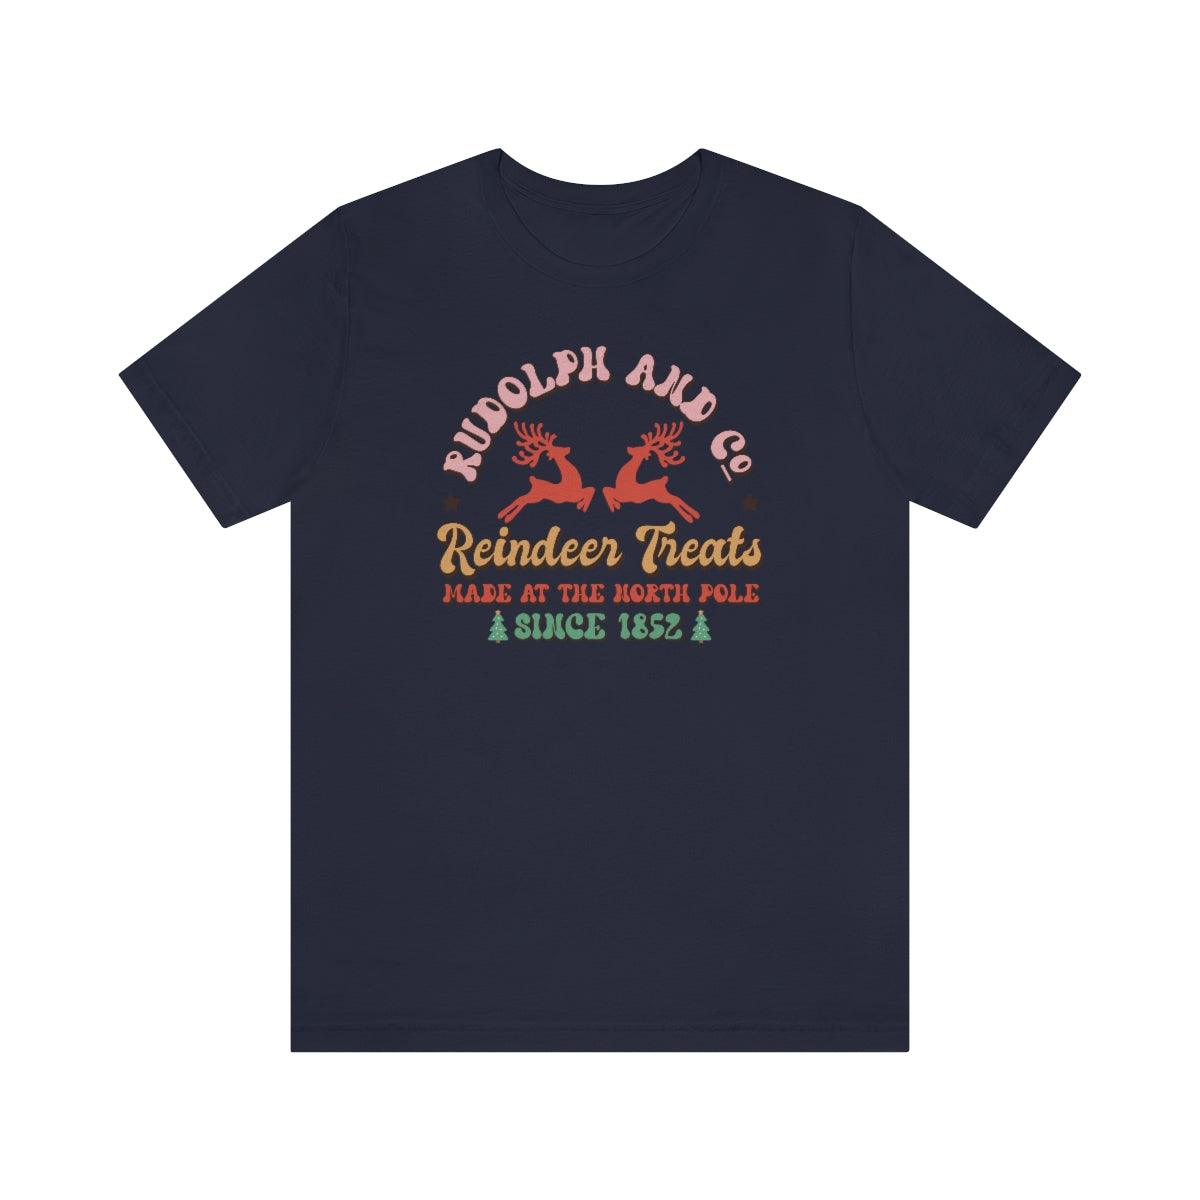 Rudolph and Co Christmas Shirt Short Sleeve Tee - Crystal Rose Design Co.